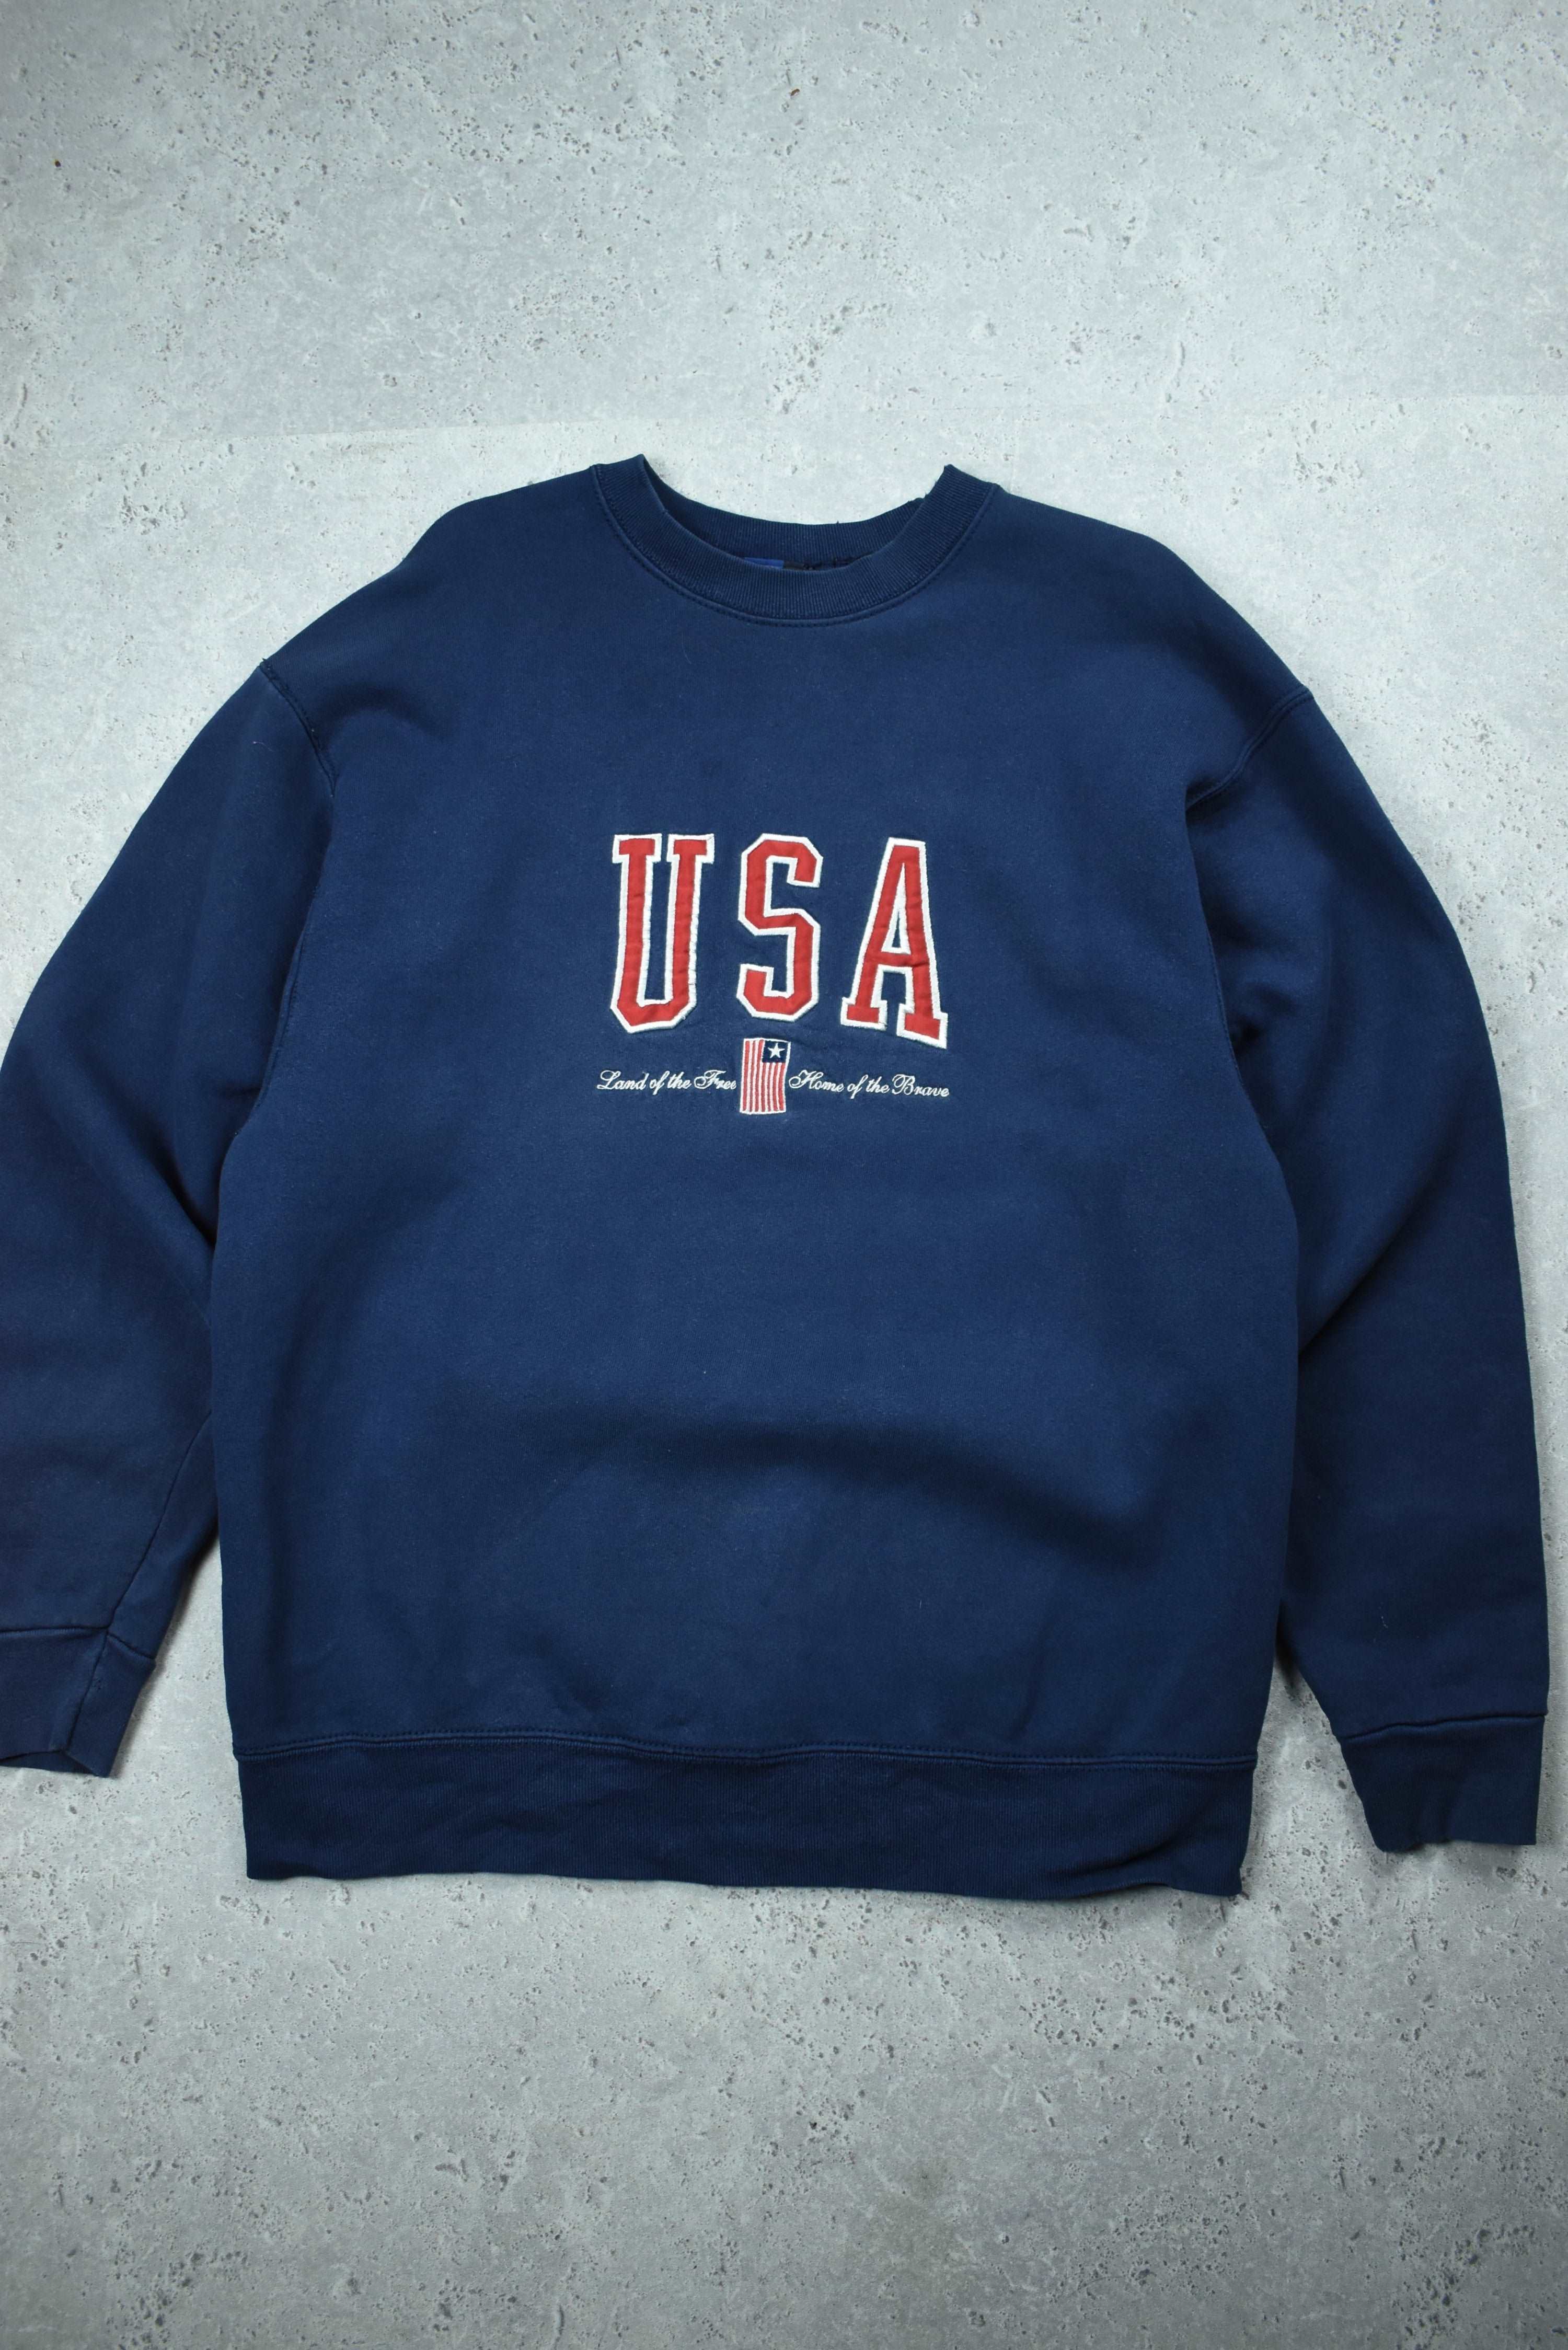 Vintage Cambridge Classic Embroidered USA Sweatshirt Large